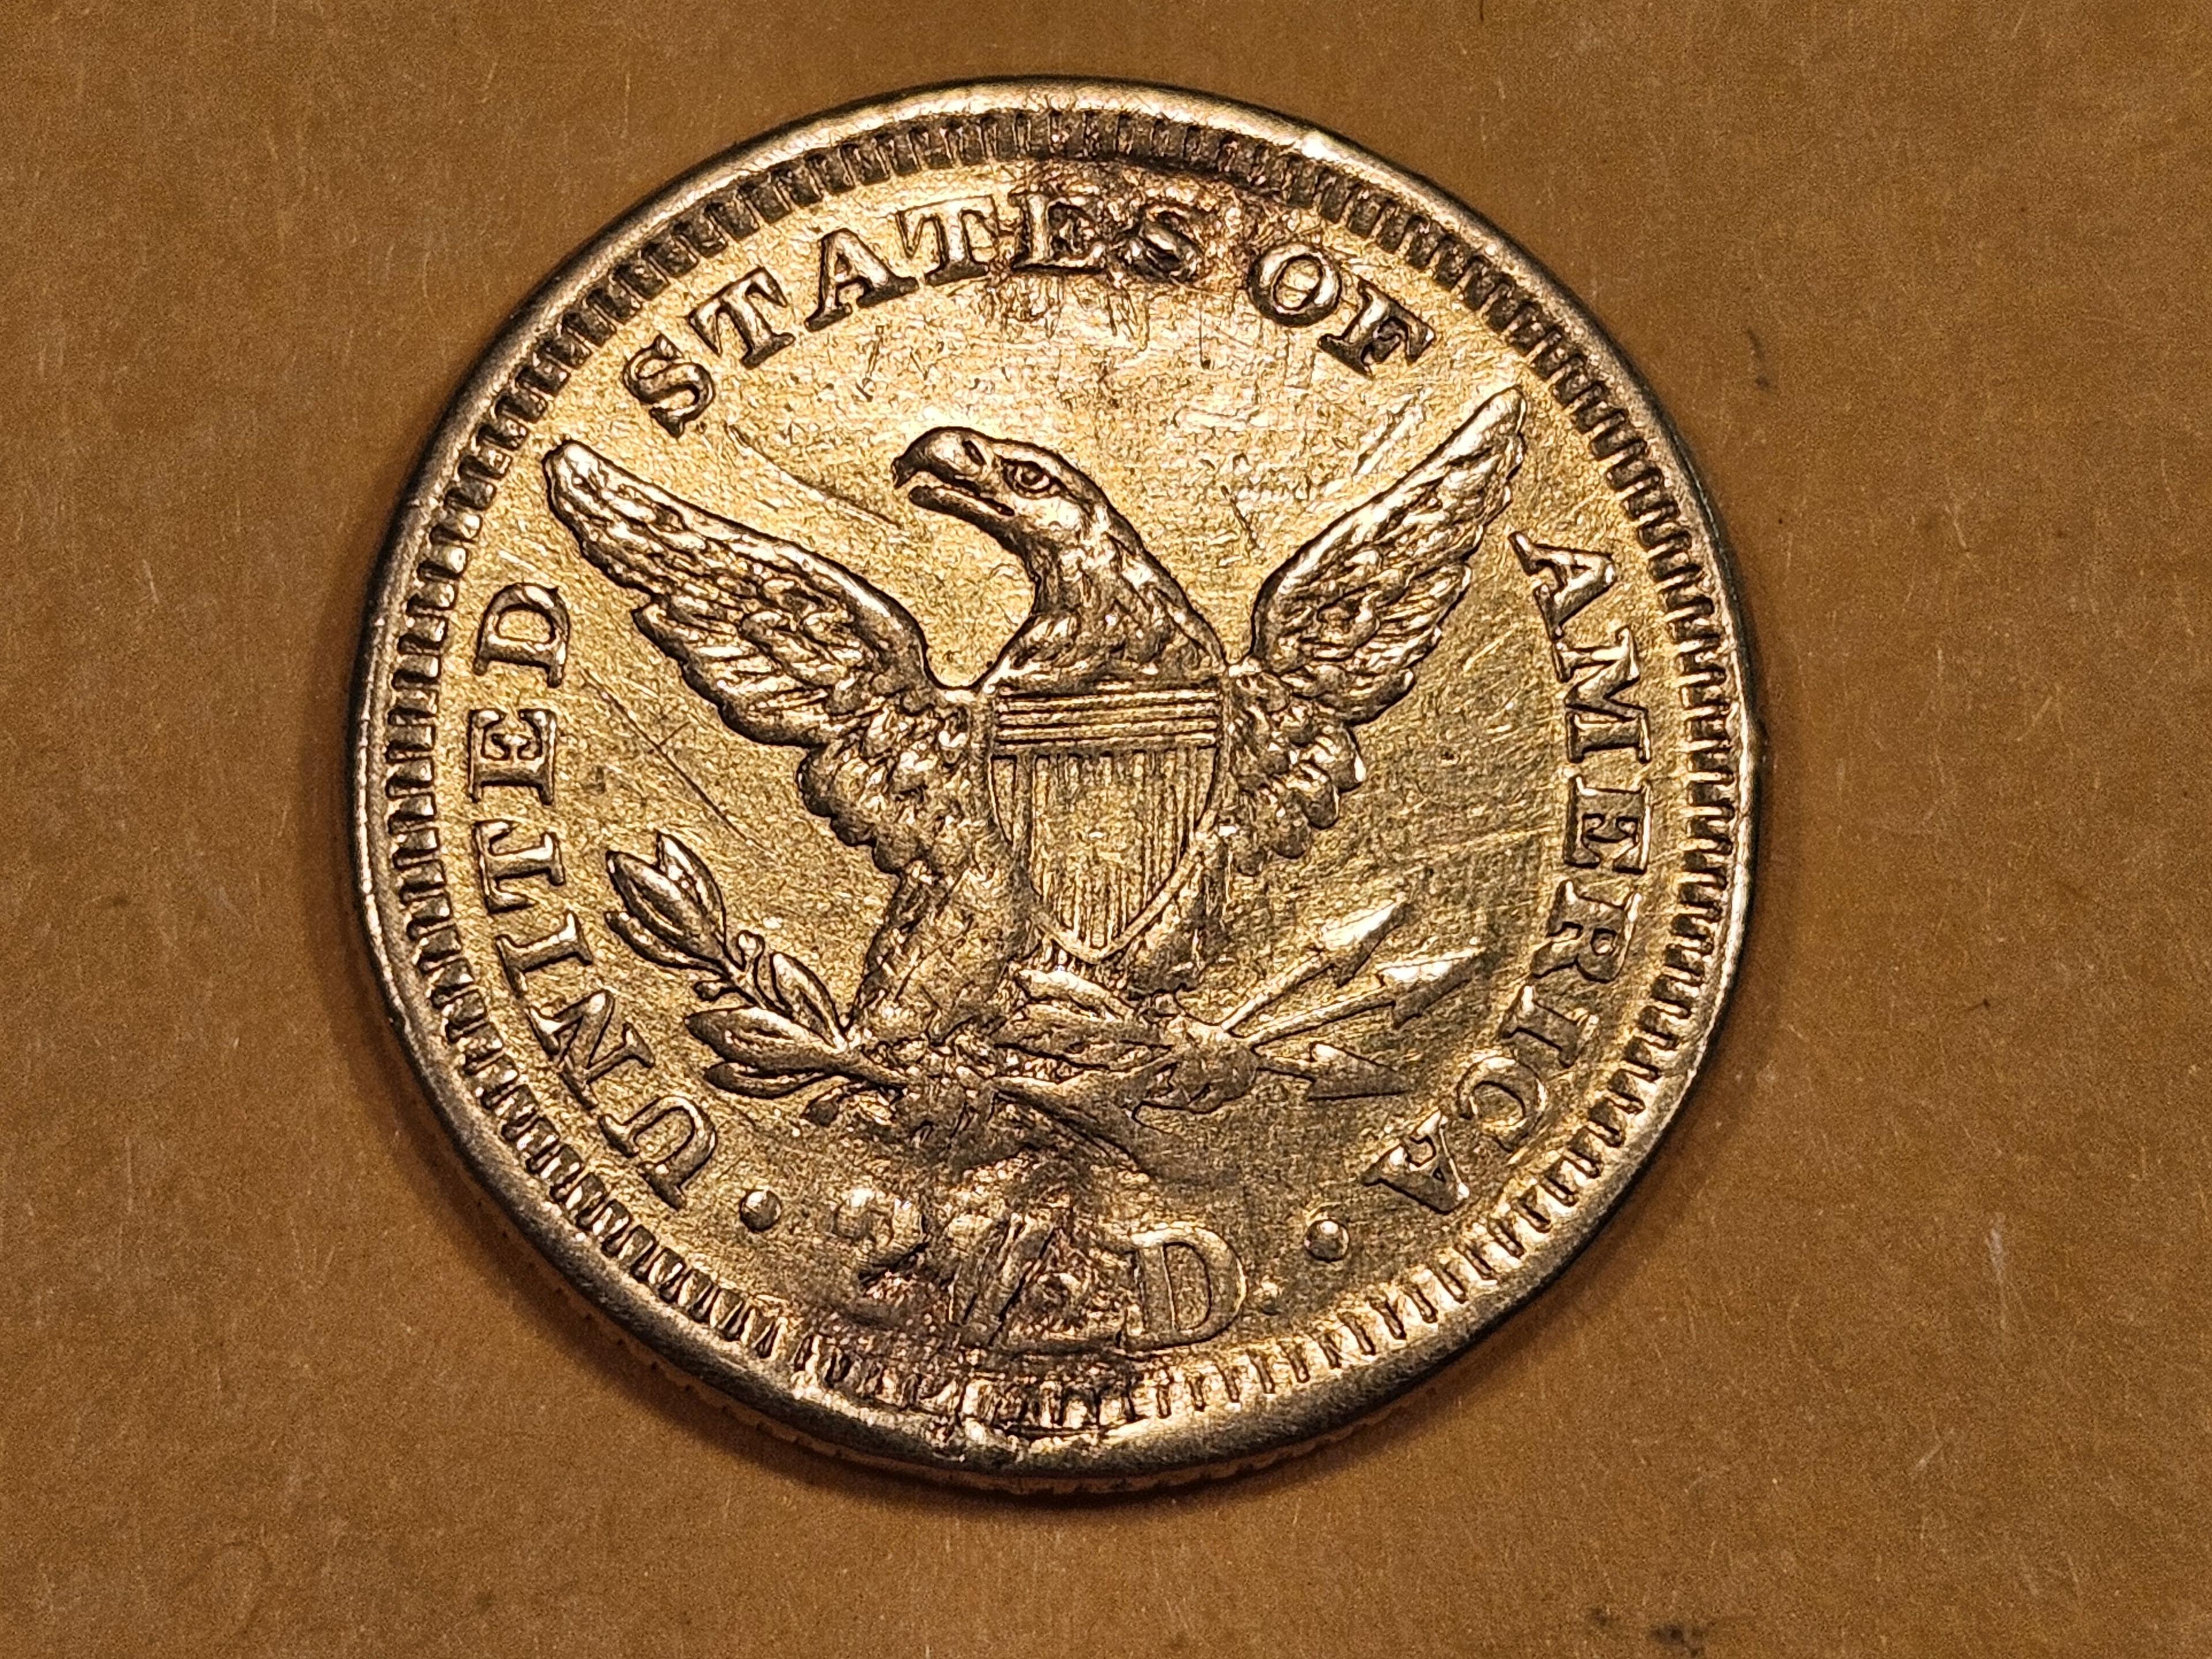 GOLD! 1878 Gold Liberty Head $2.50 dollars